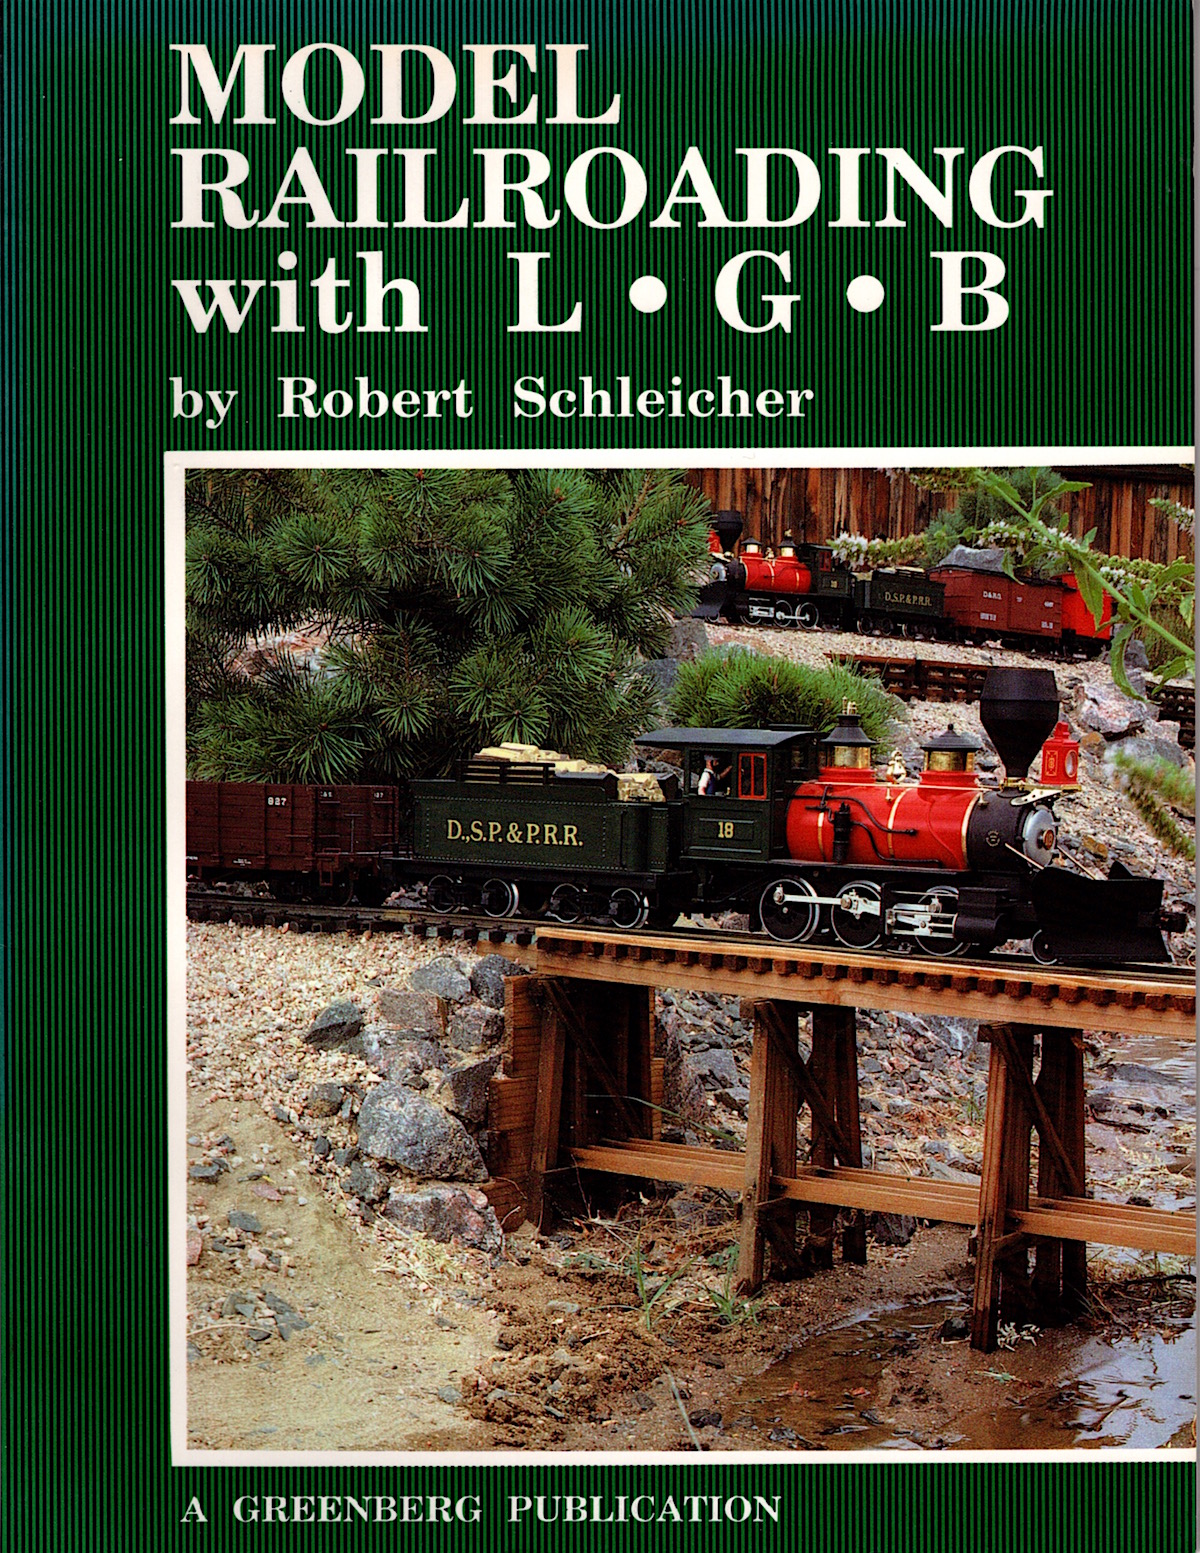 LGB Anlagen (Layouts) - 1989 Model Railroading with LGB